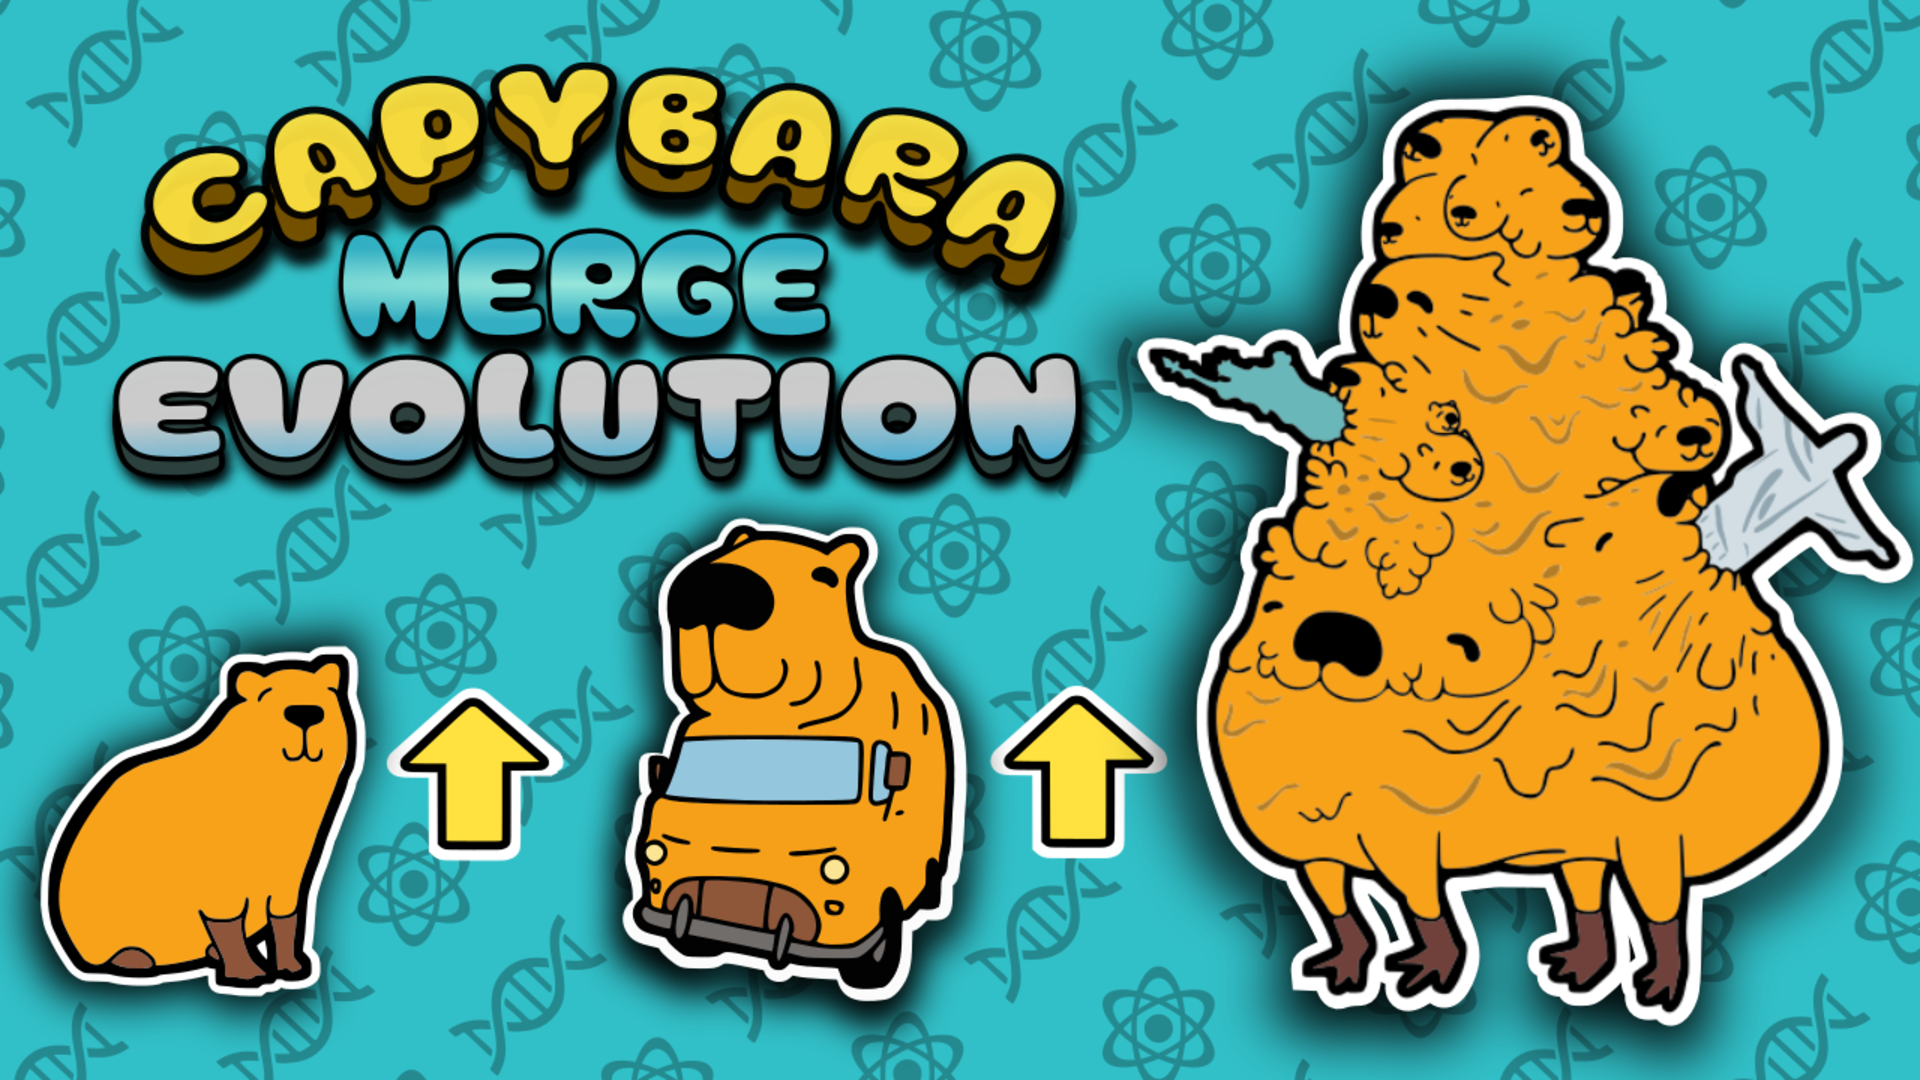 Capybara Merge Evolution Game Image